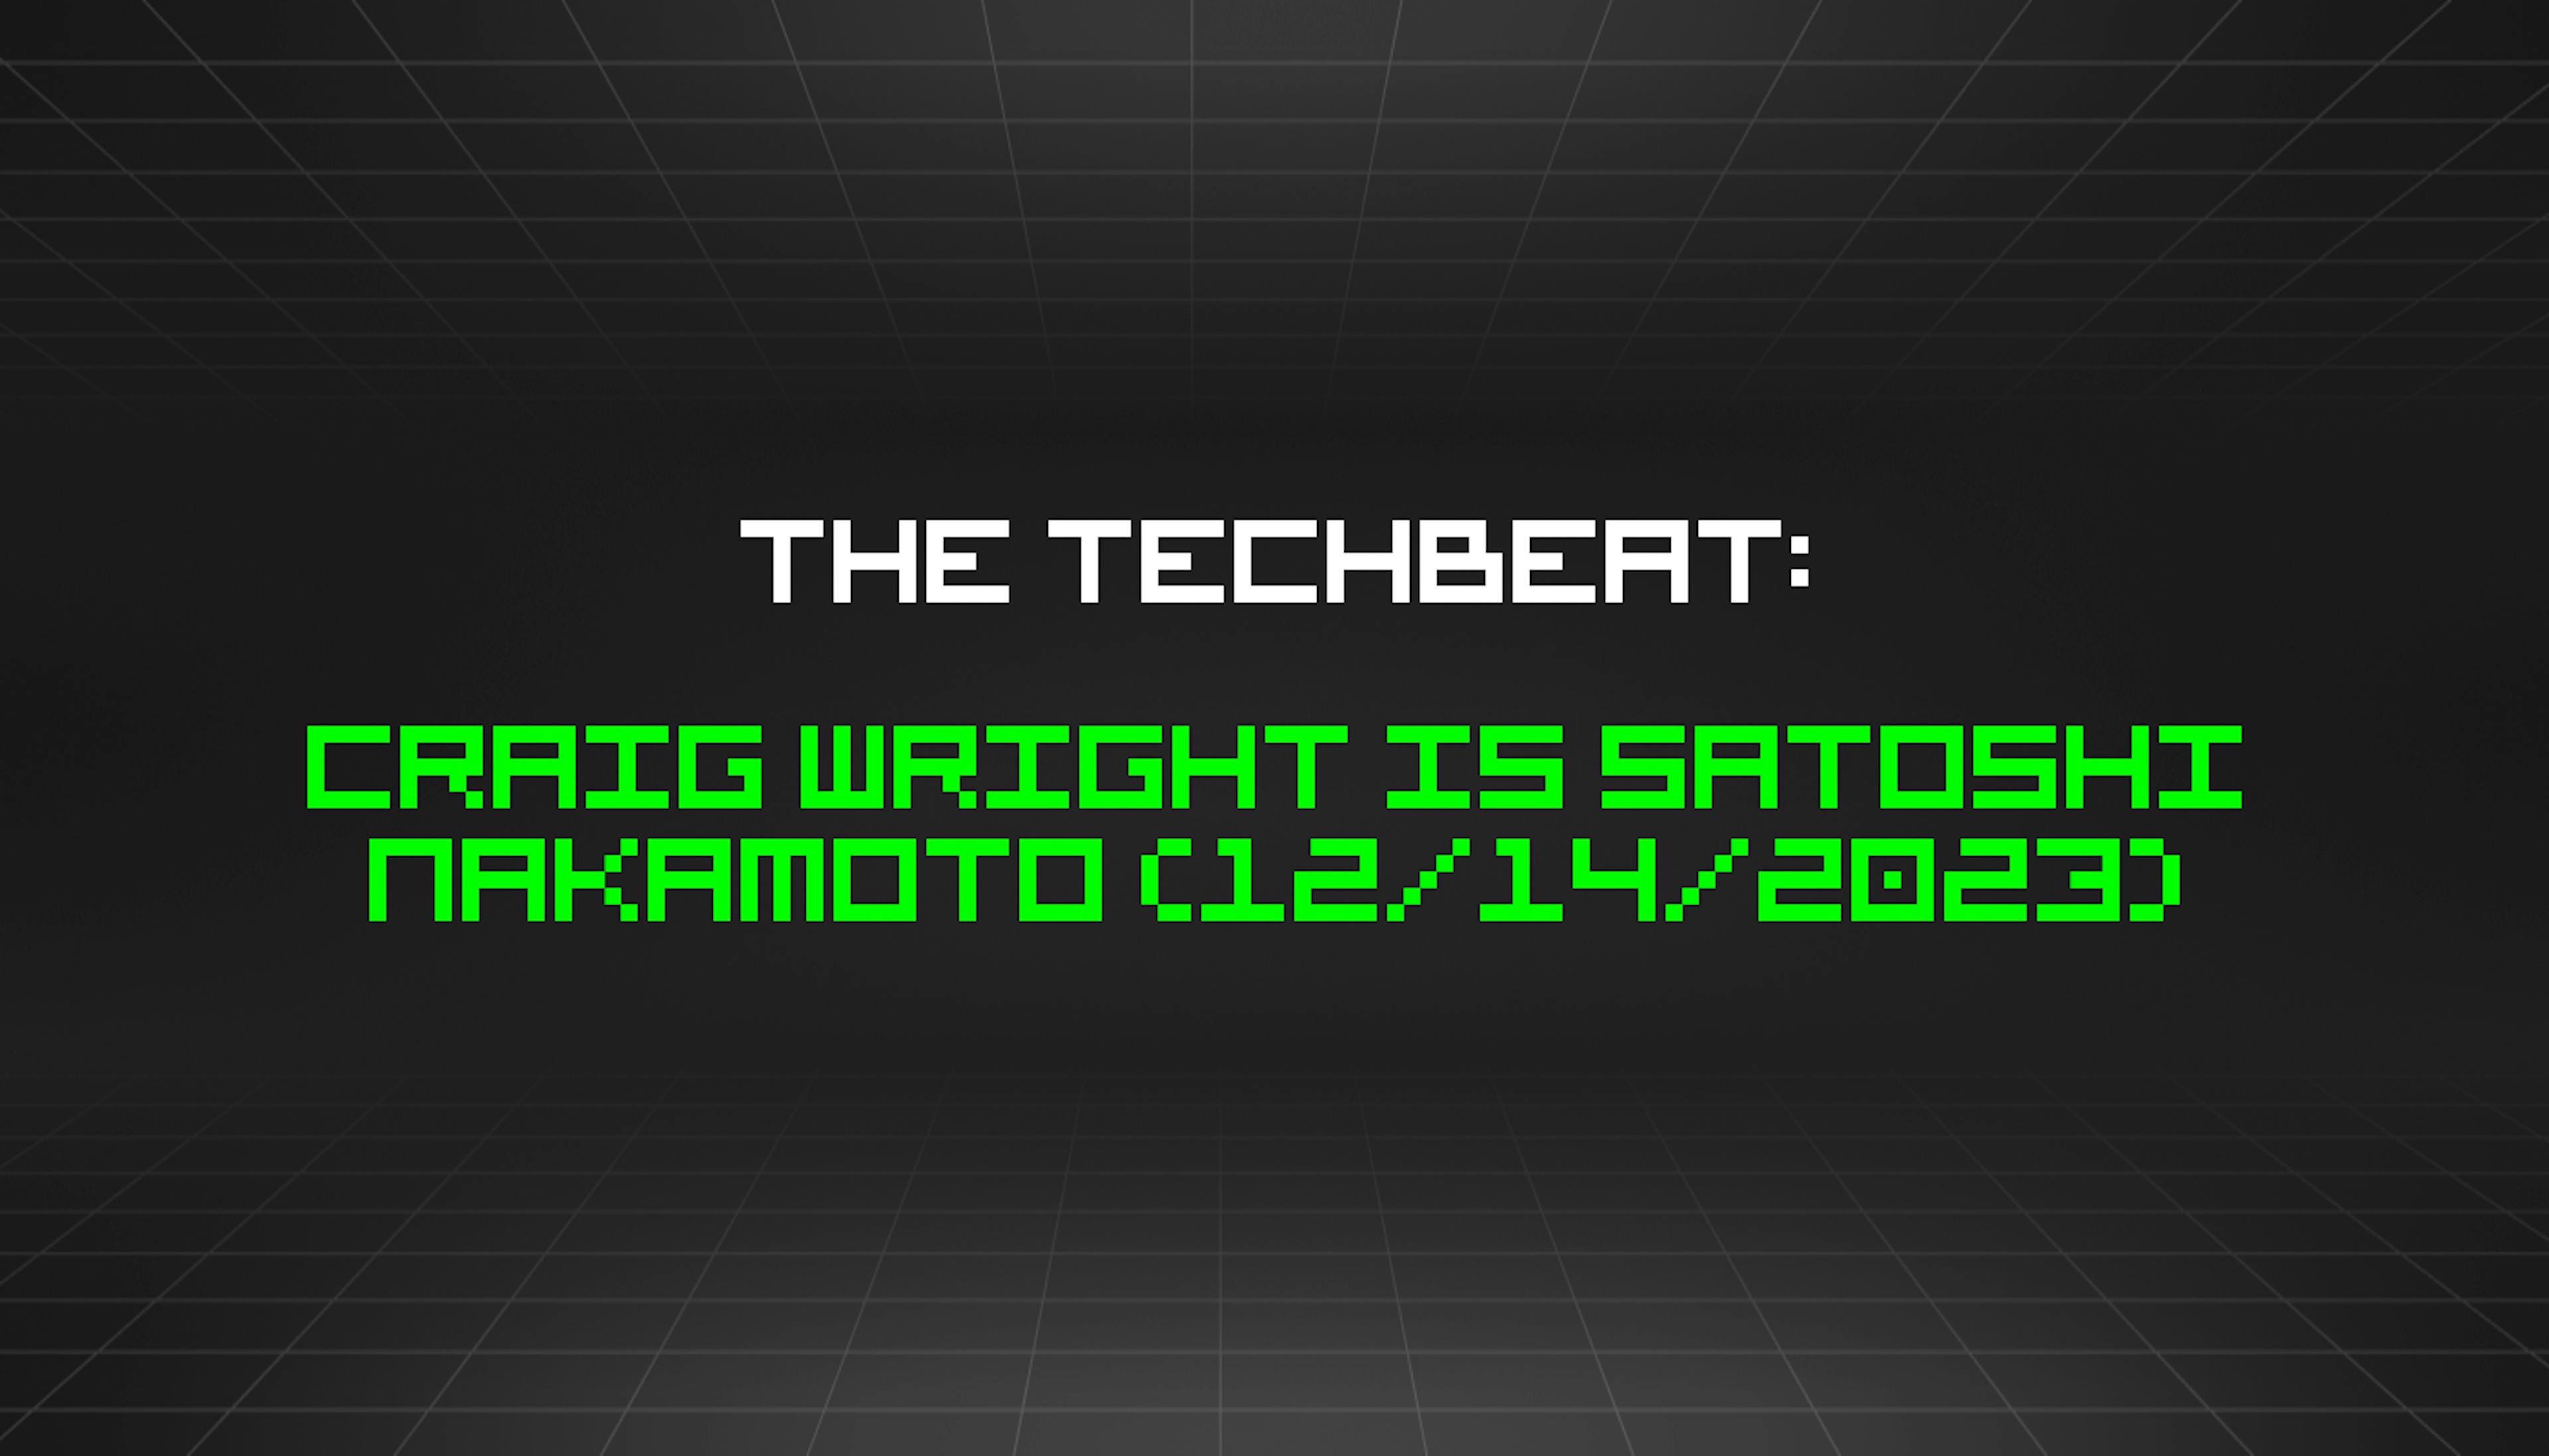 featured image - The TechBeat: Craig Wright is Satoshi Nakamoto (12/14/2023)